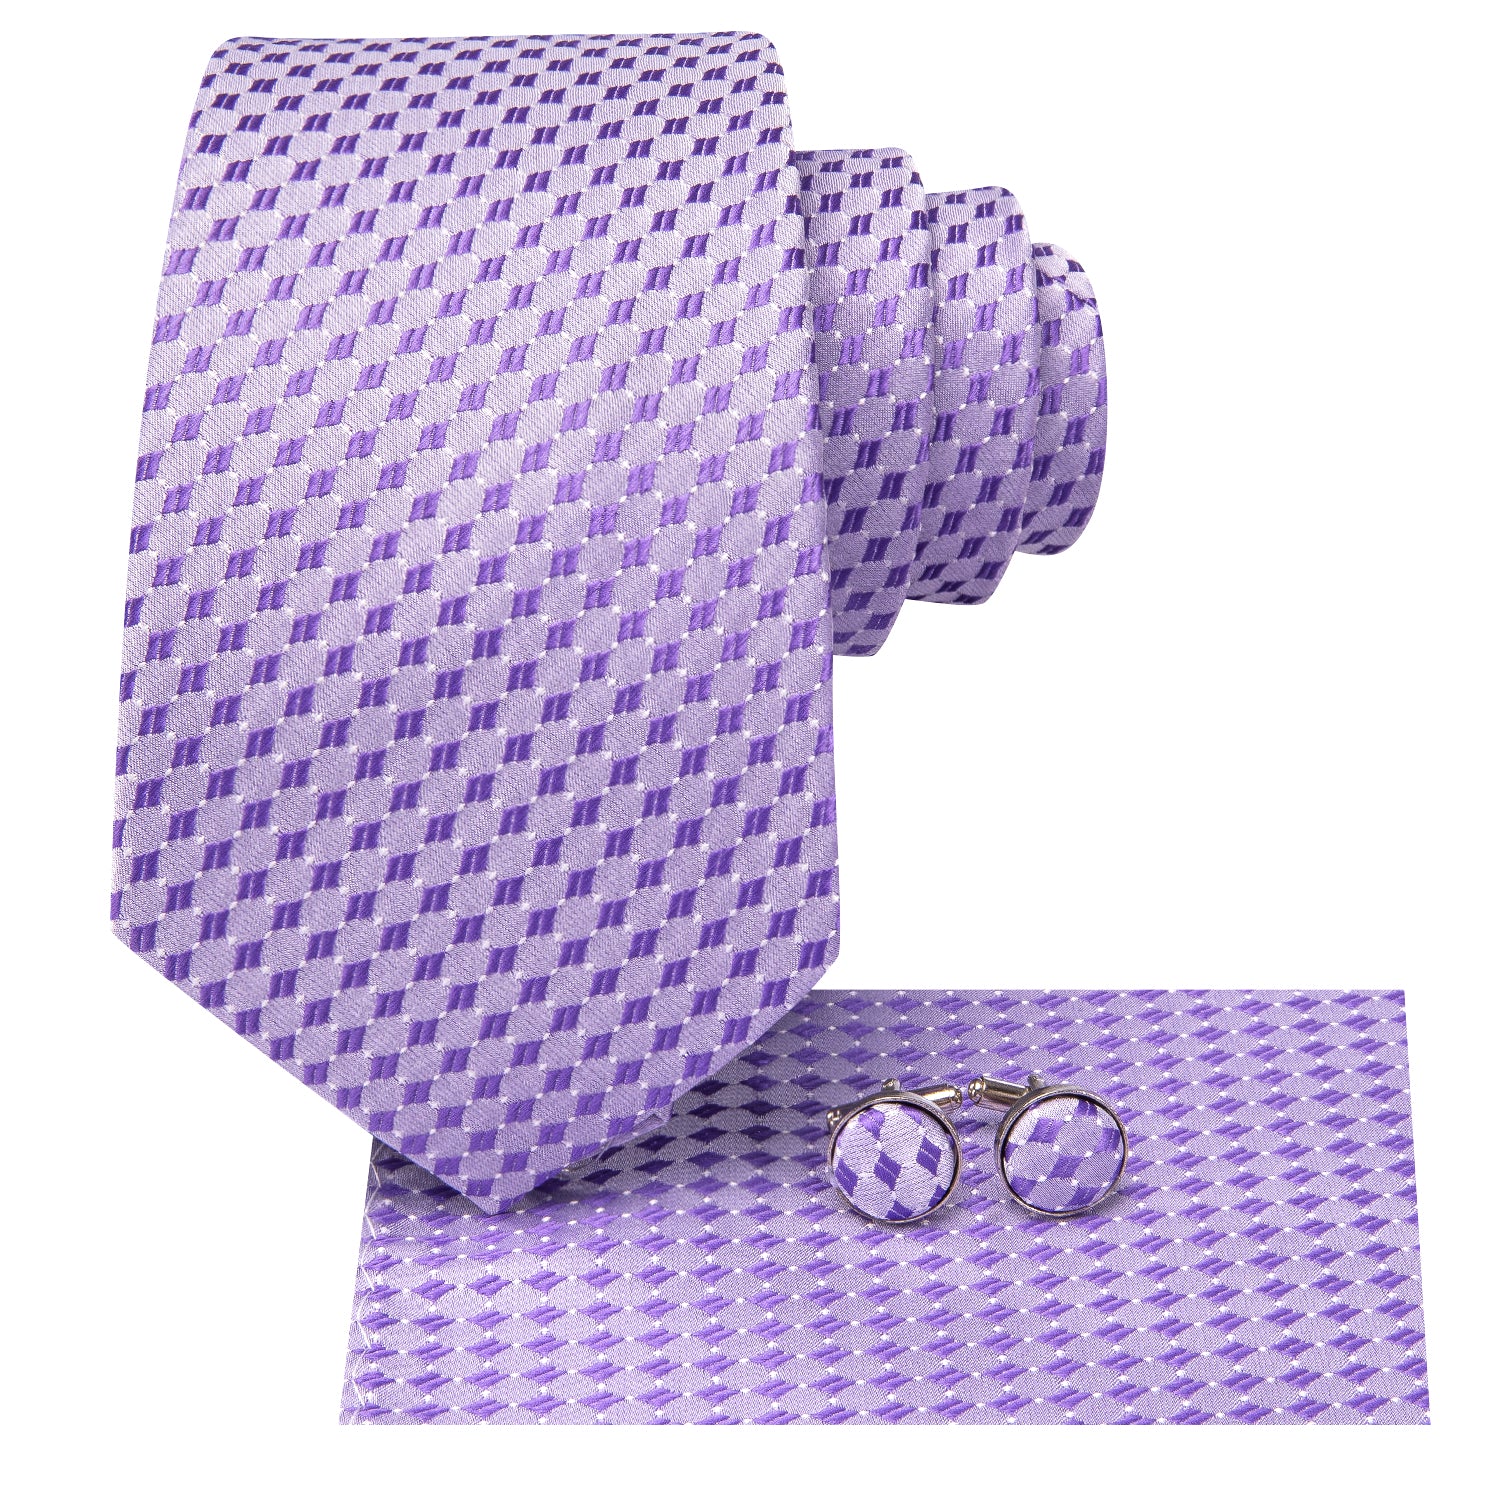 Hi-Tie Purple Novelty Men's Tie Pocket Square Cufflinks Set